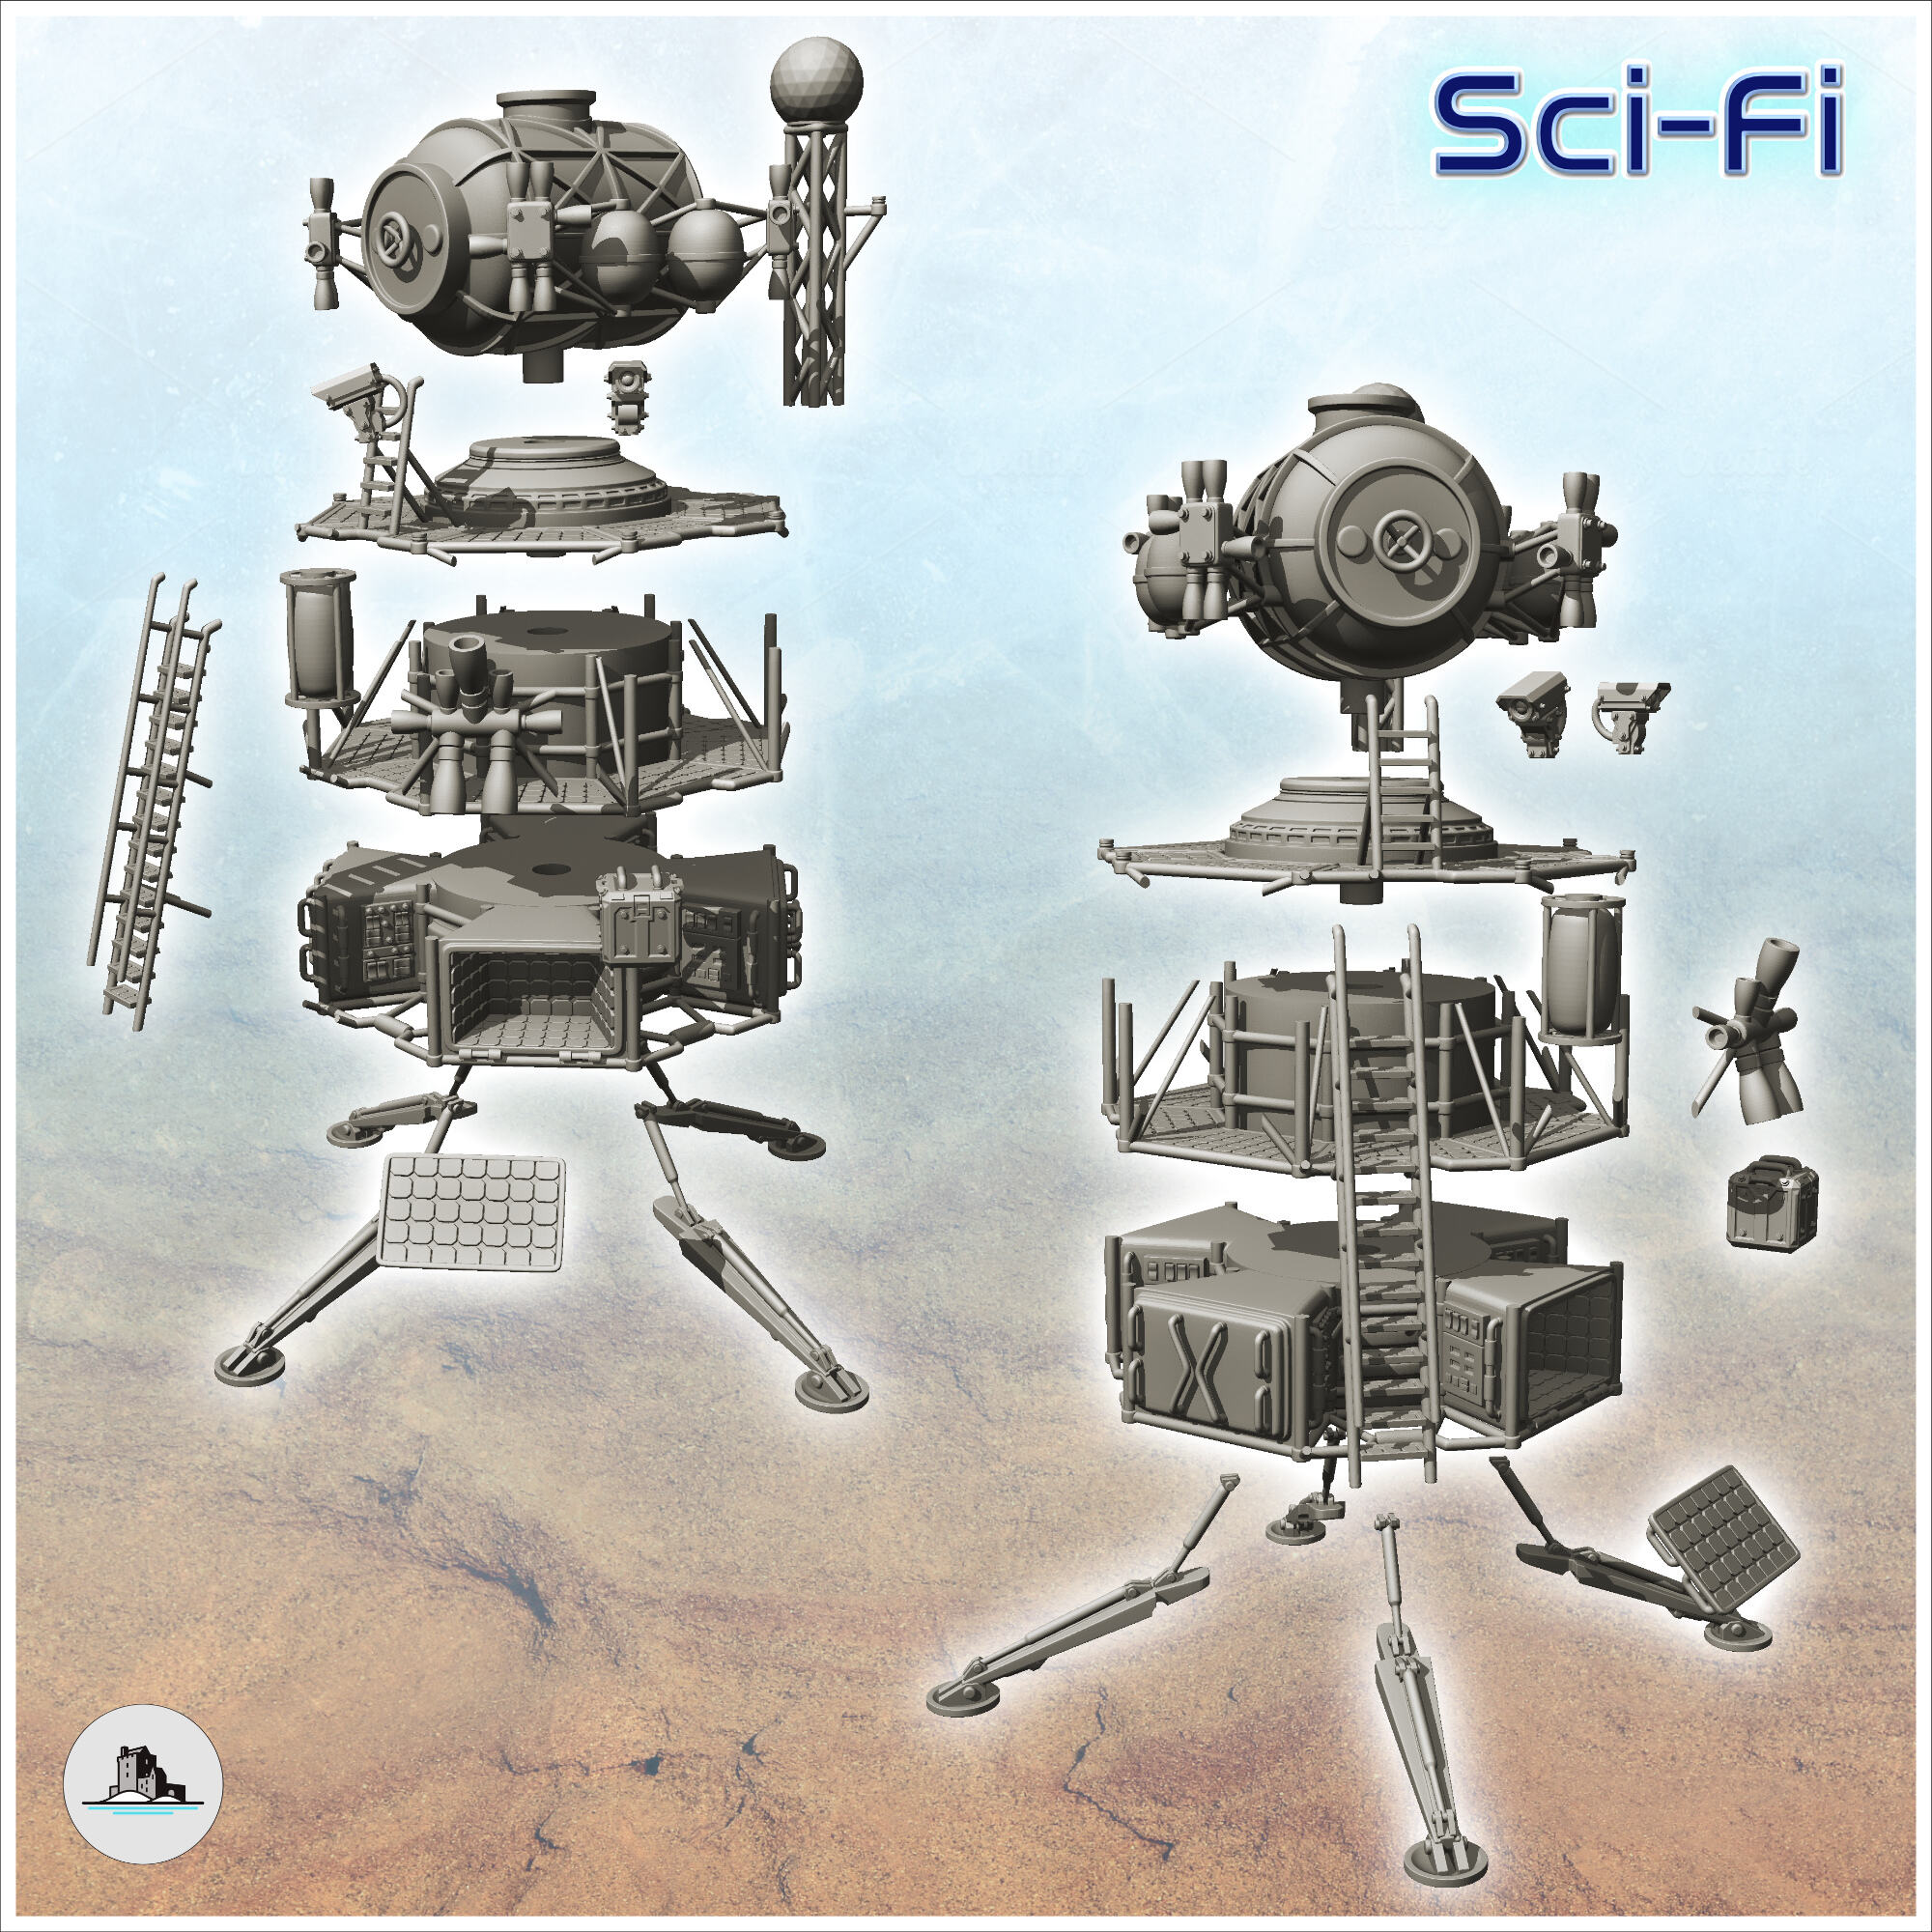 Space exploration probe - Terrain Scifi Science fiction SF